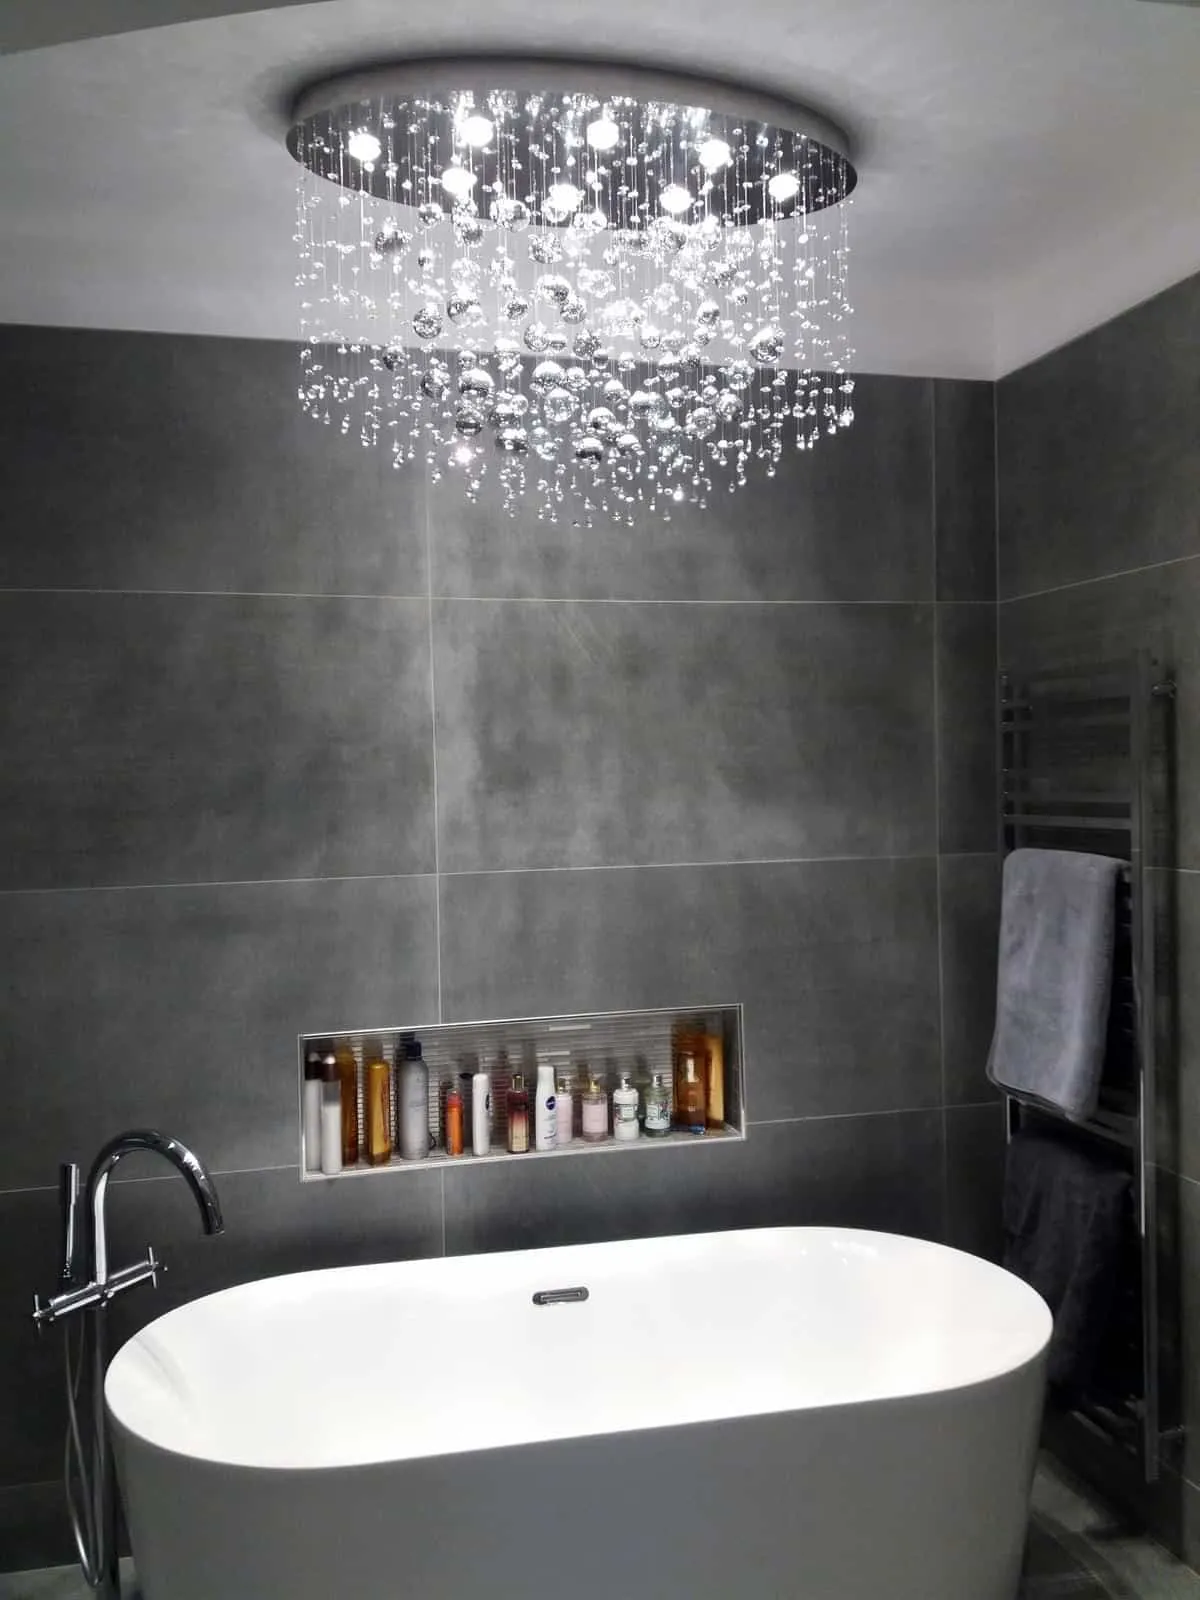 Crystal chandelier above bathtub in bathroom